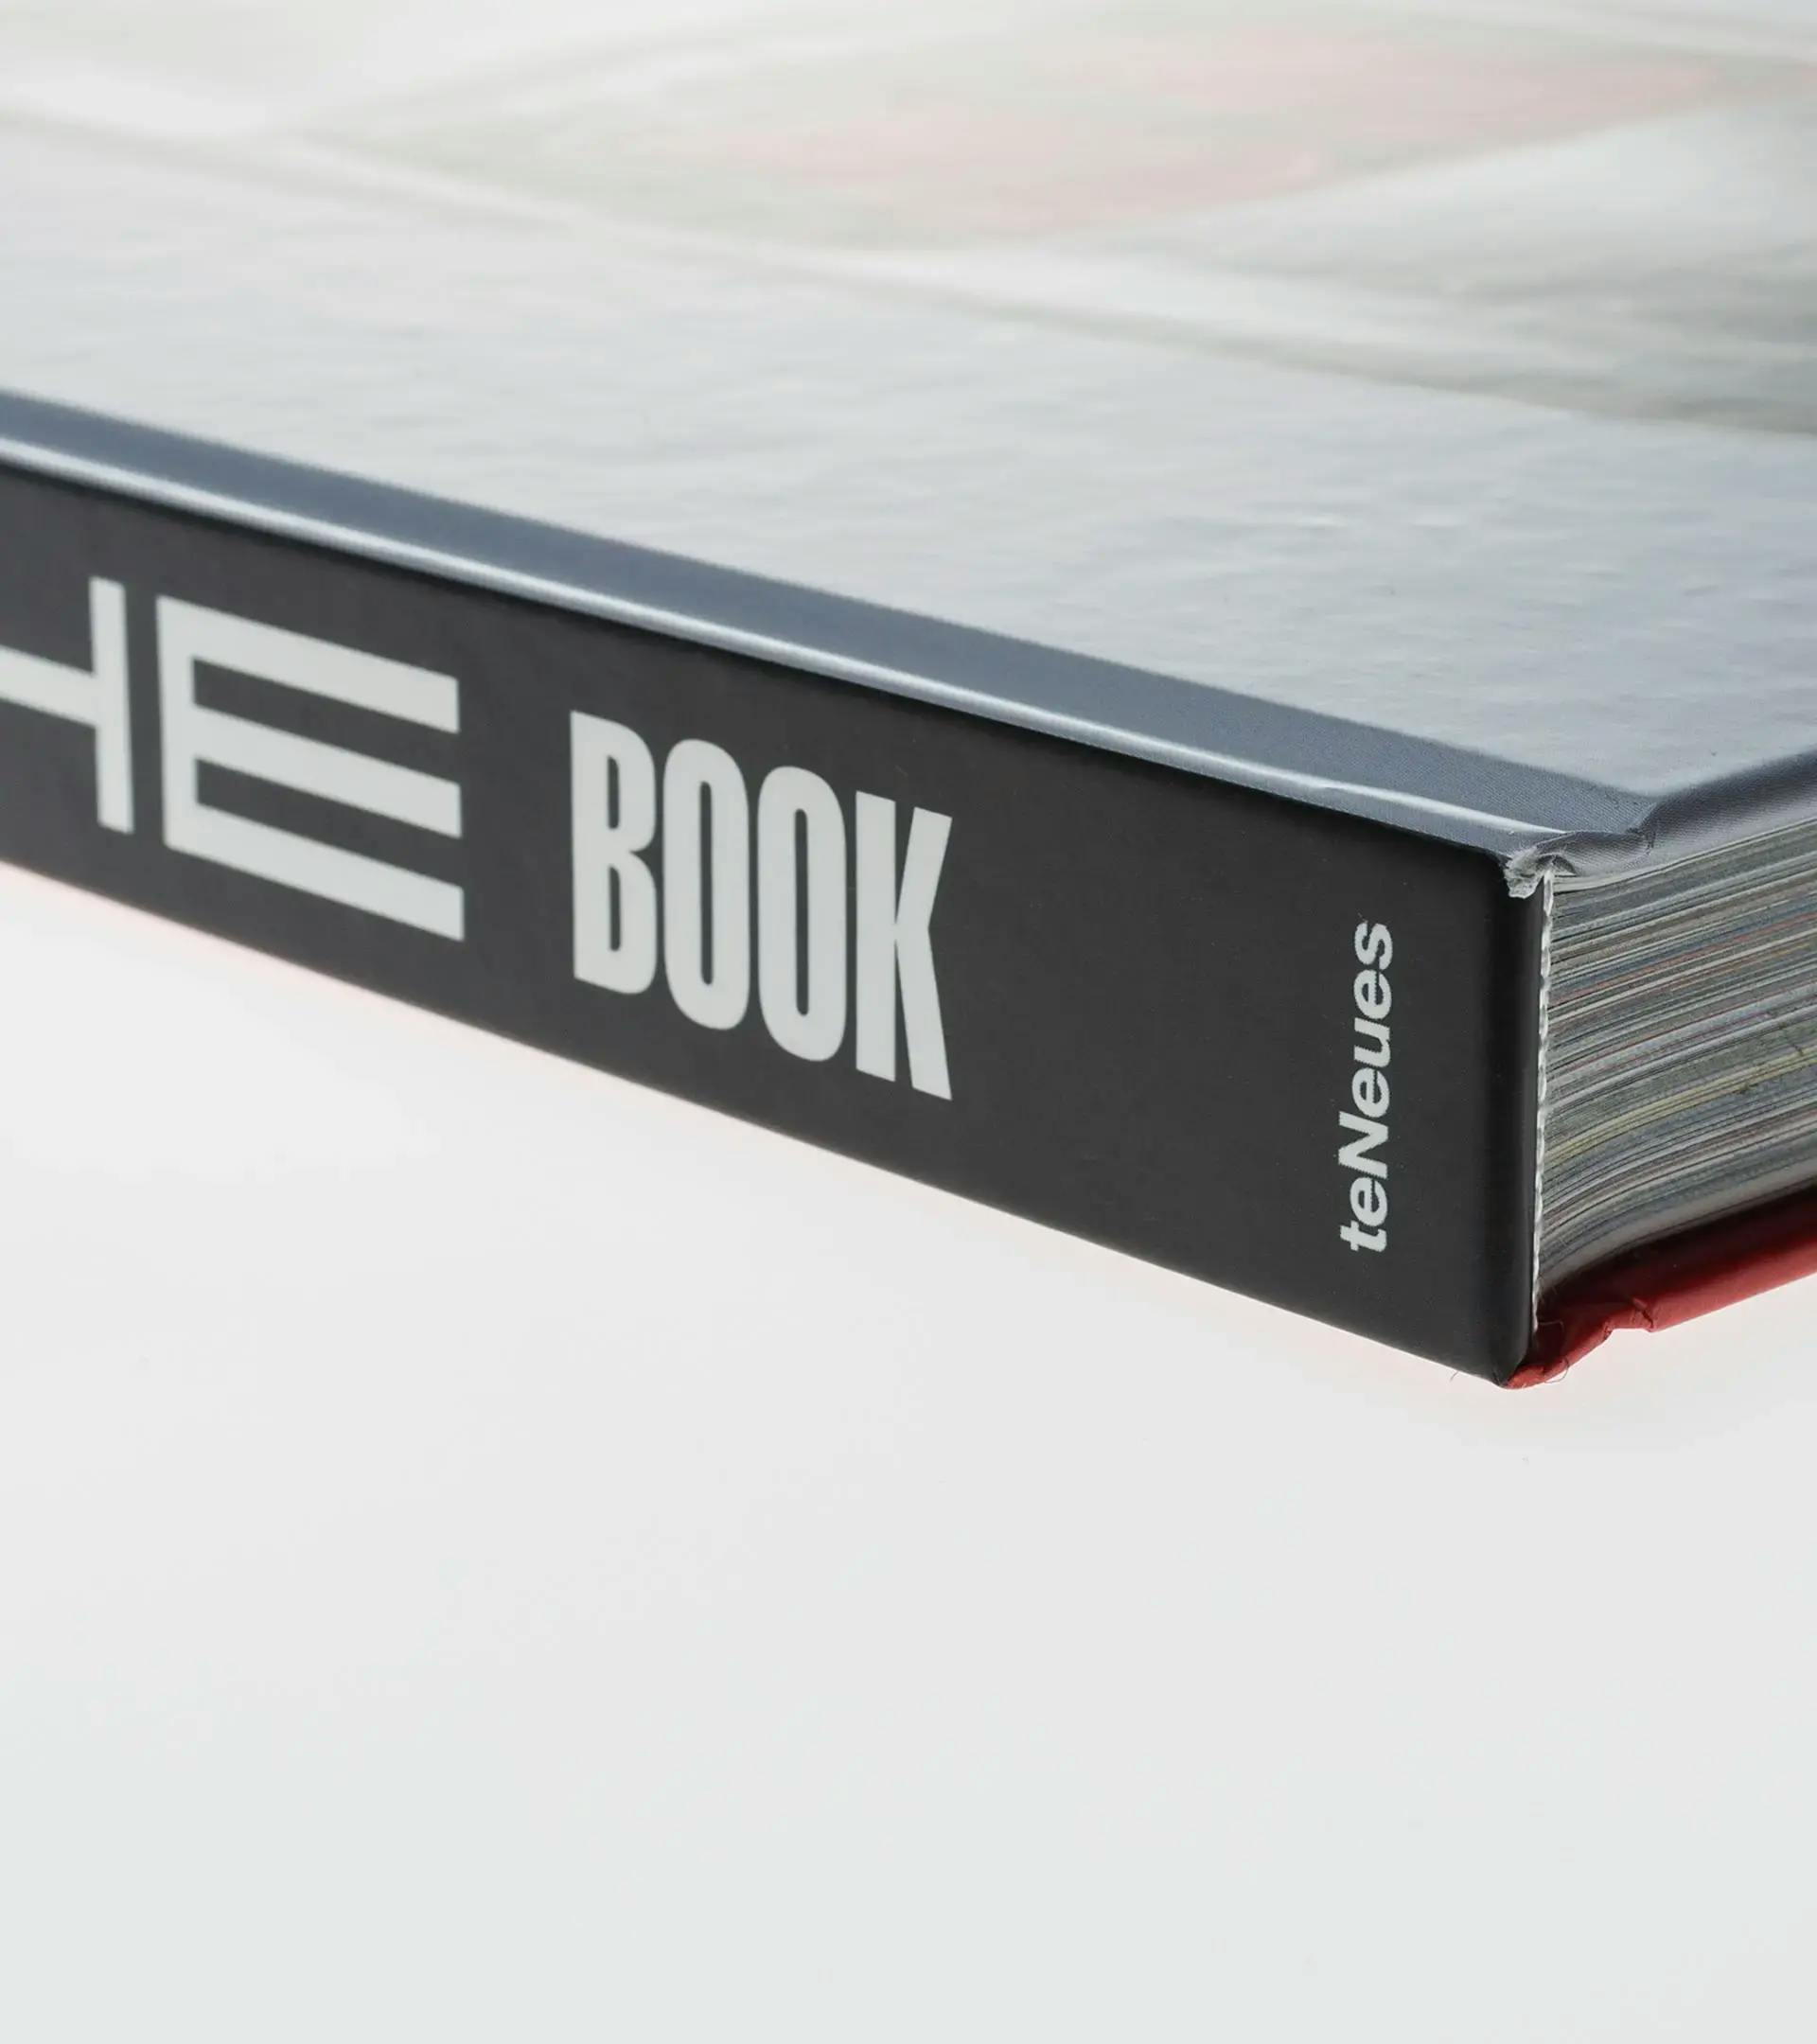 The Porsche Book - The Best Porsche Images by Frank M. Orel 4